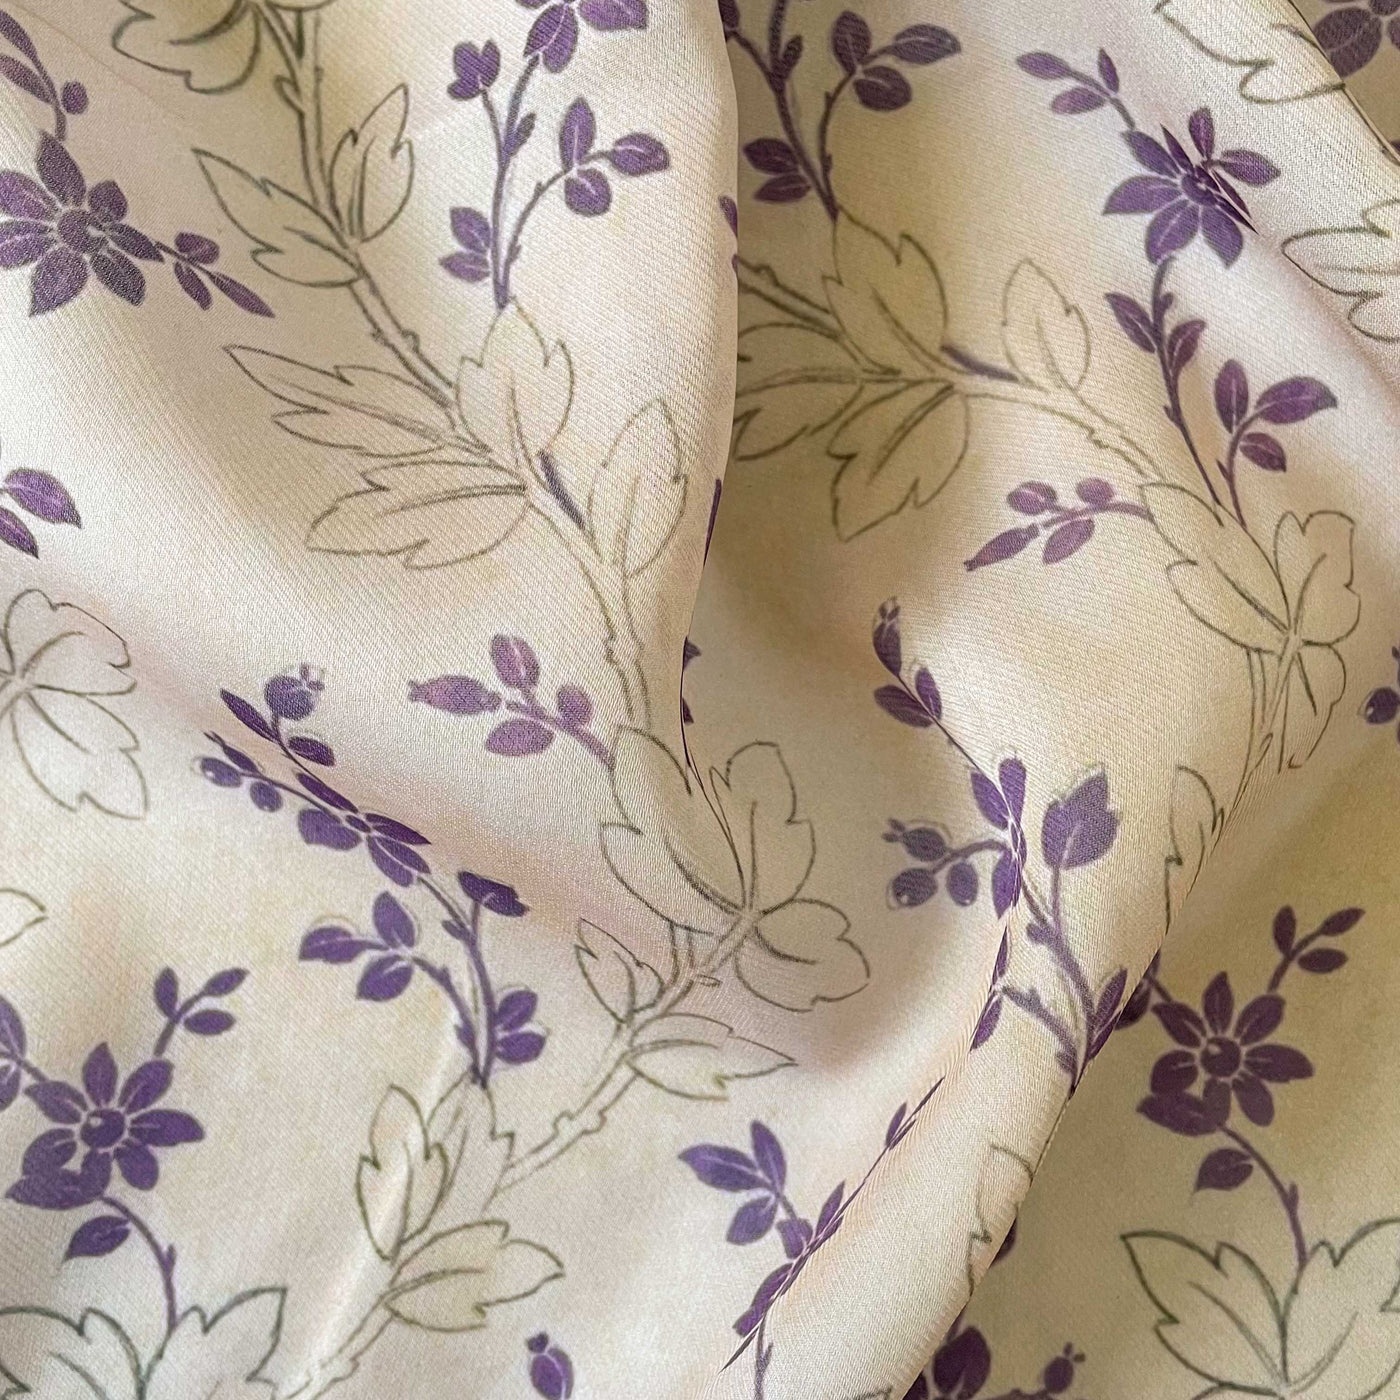 Digital Printed Burberry Silk Fabric Fabric Khaki & Purple Abstract Floral Printed Burberry Silk Fabric (Width 47 Inches)